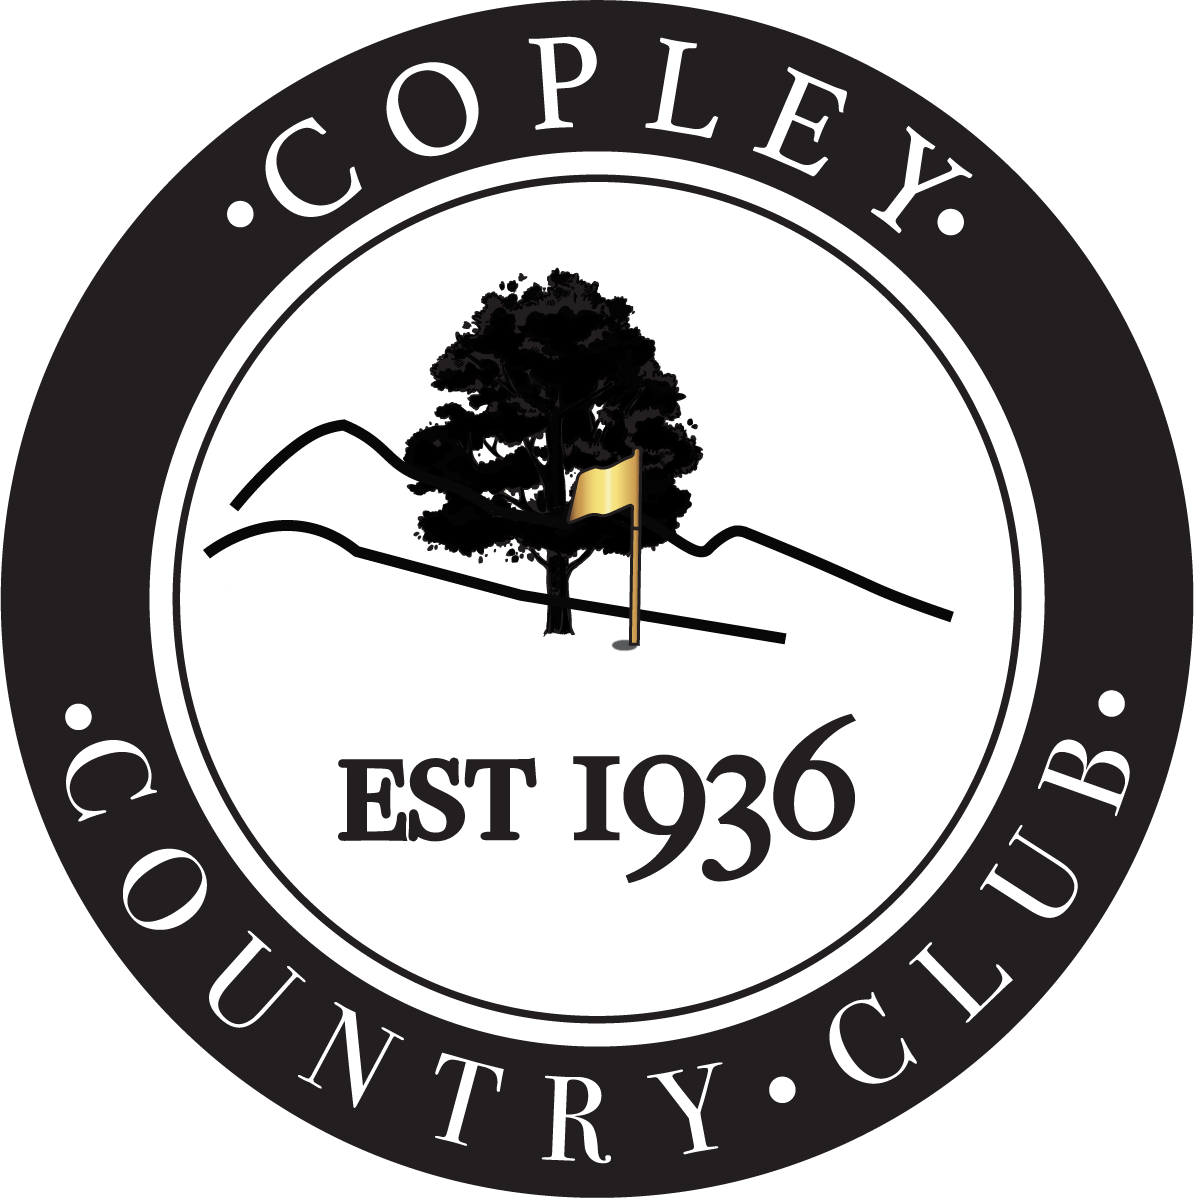 Copley Circle black gold flag